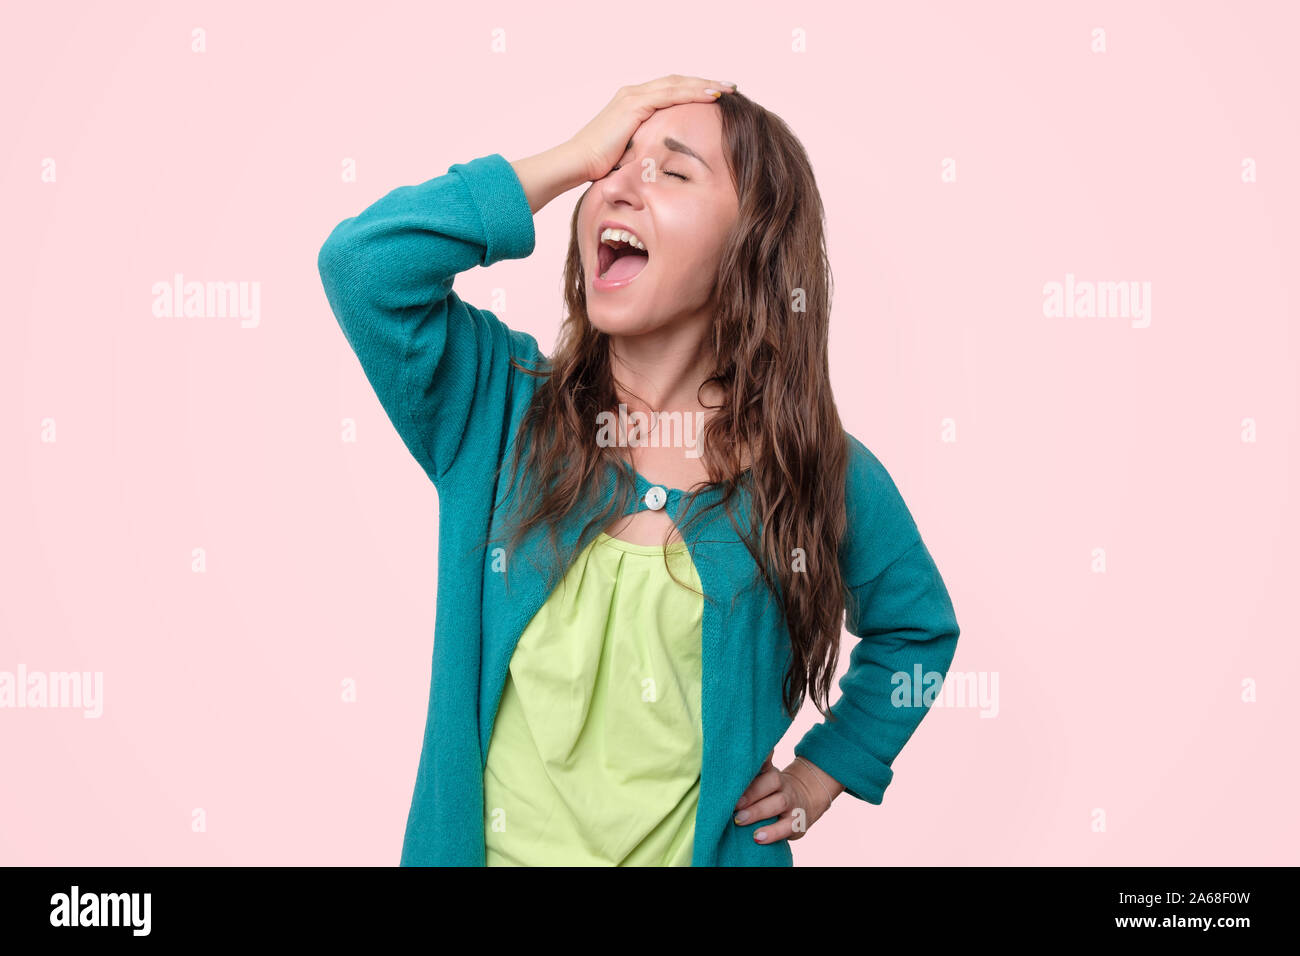 Cheerful laughing young woman touching head. Studio shot Stock Photo